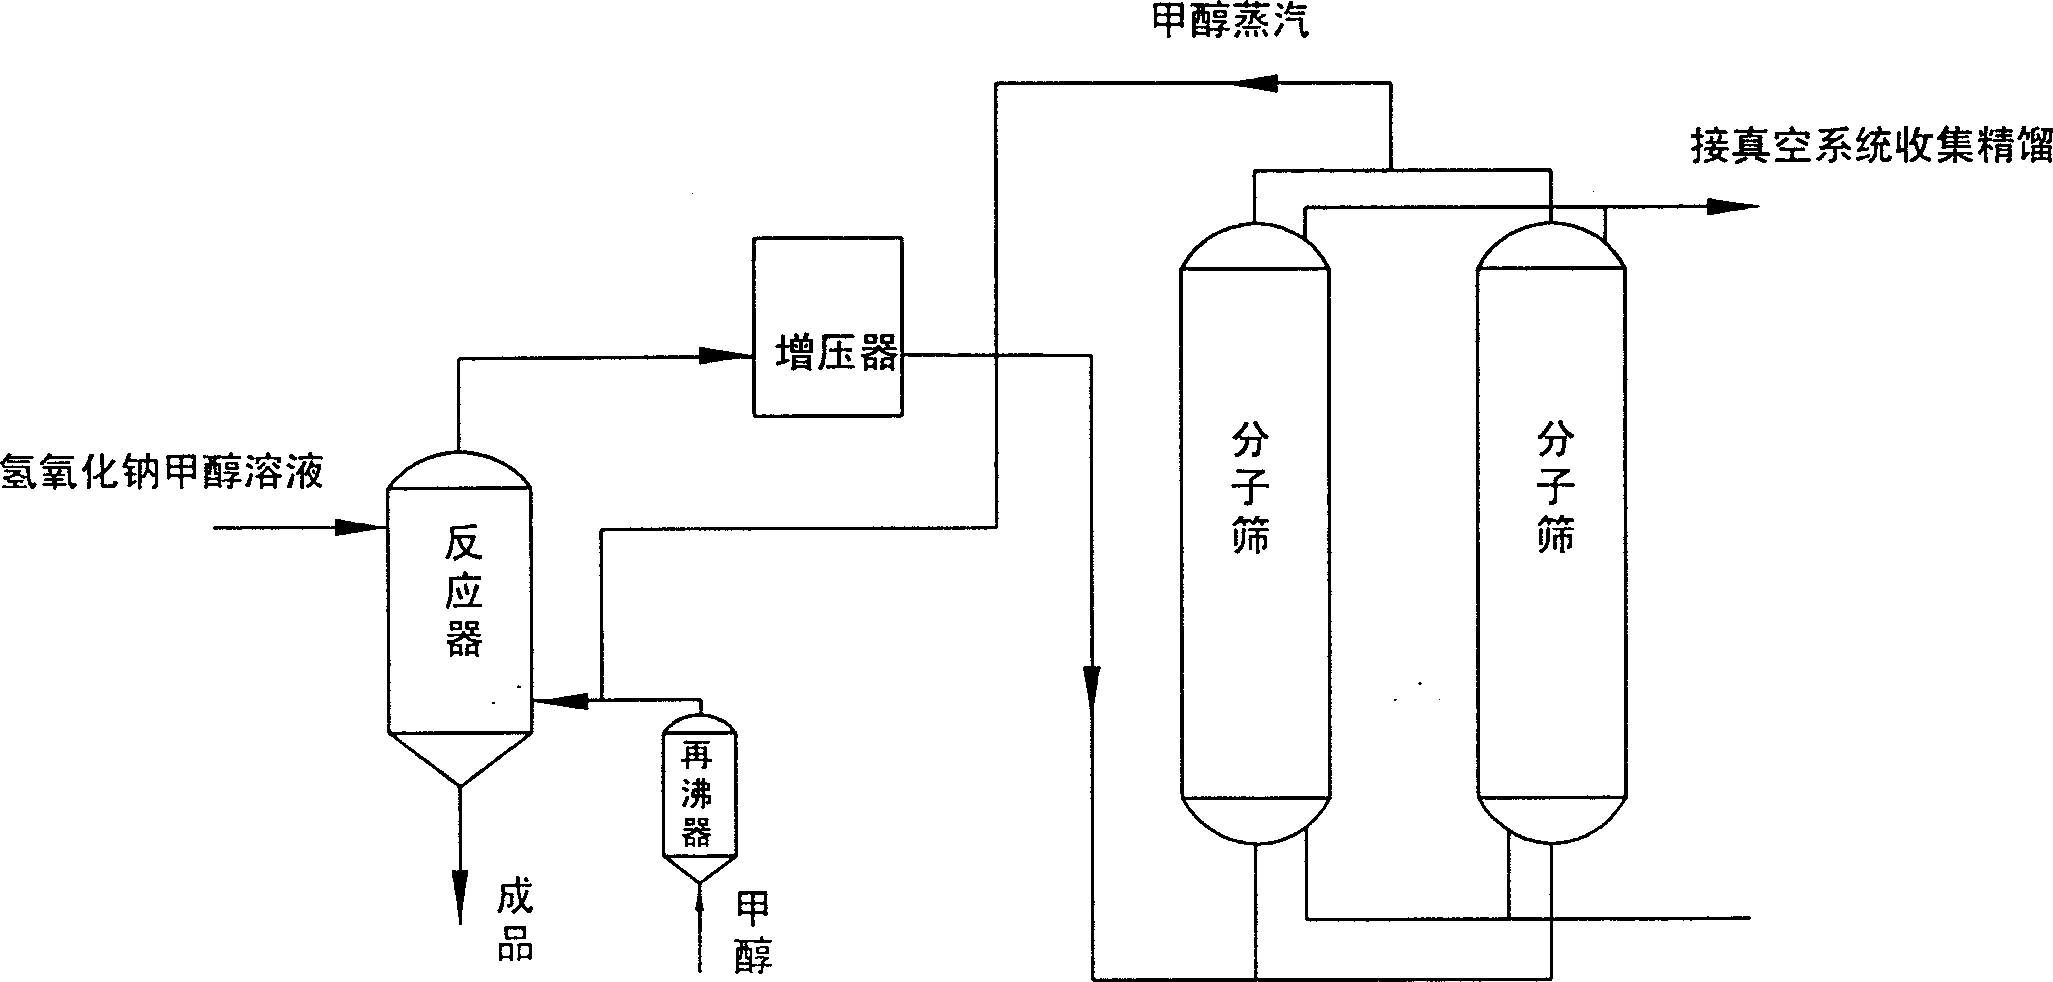 Technique of alkaline process for producing sodium methoxide/sodium ethylate